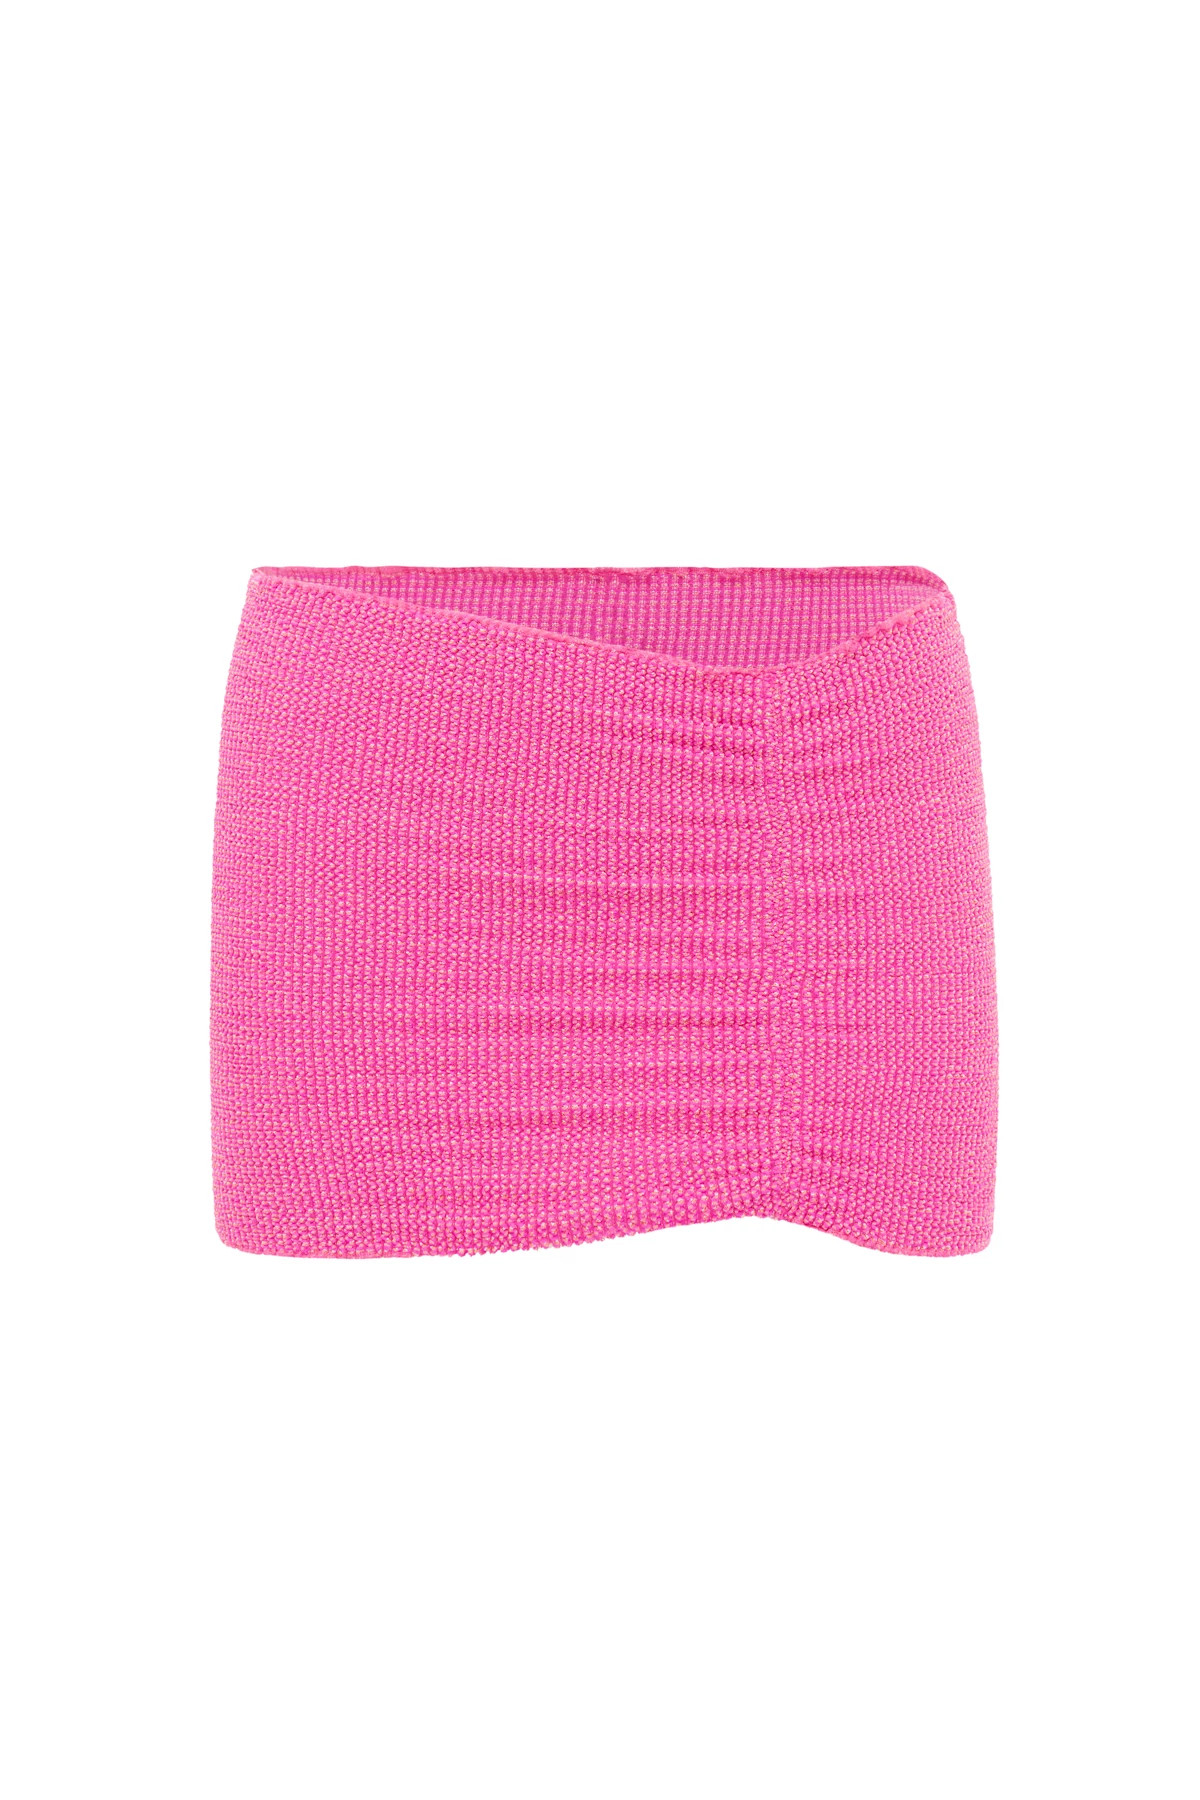 WILDBERRY LUREX Dara Mini Cover Skirt image number 4